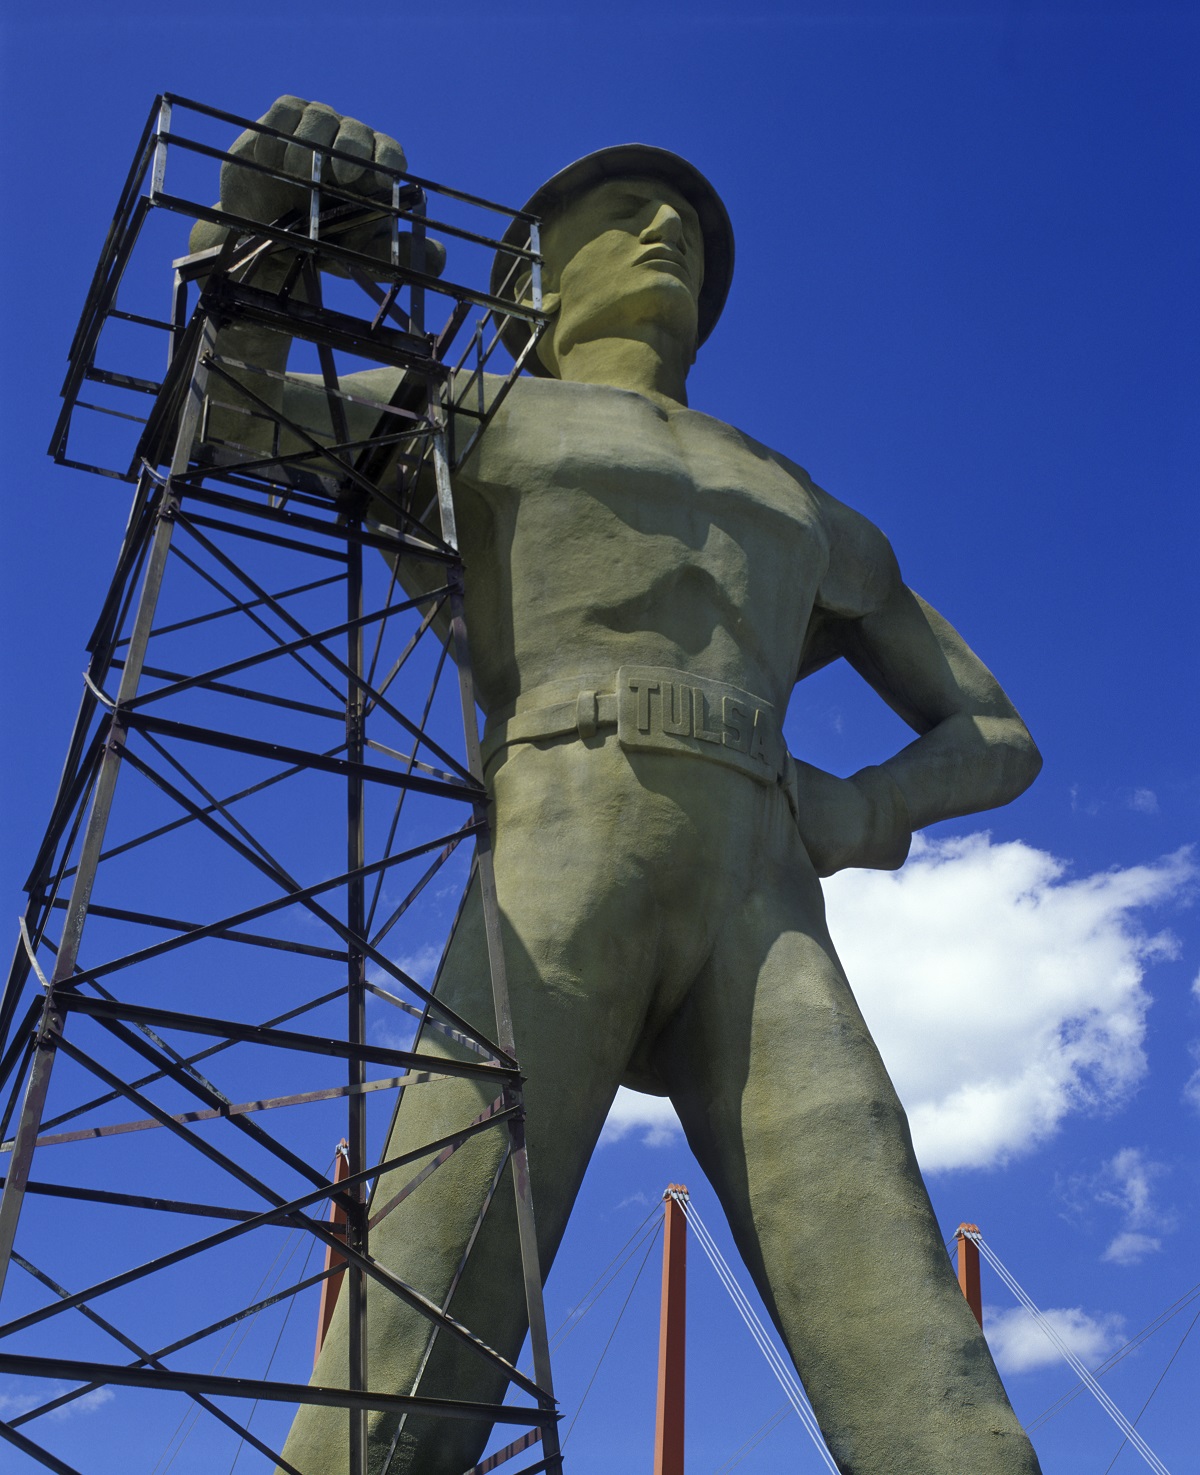 Golden Driller statue in Tulsa, Oklahoma. | R. Krubner/ClassicStock/Getty Images